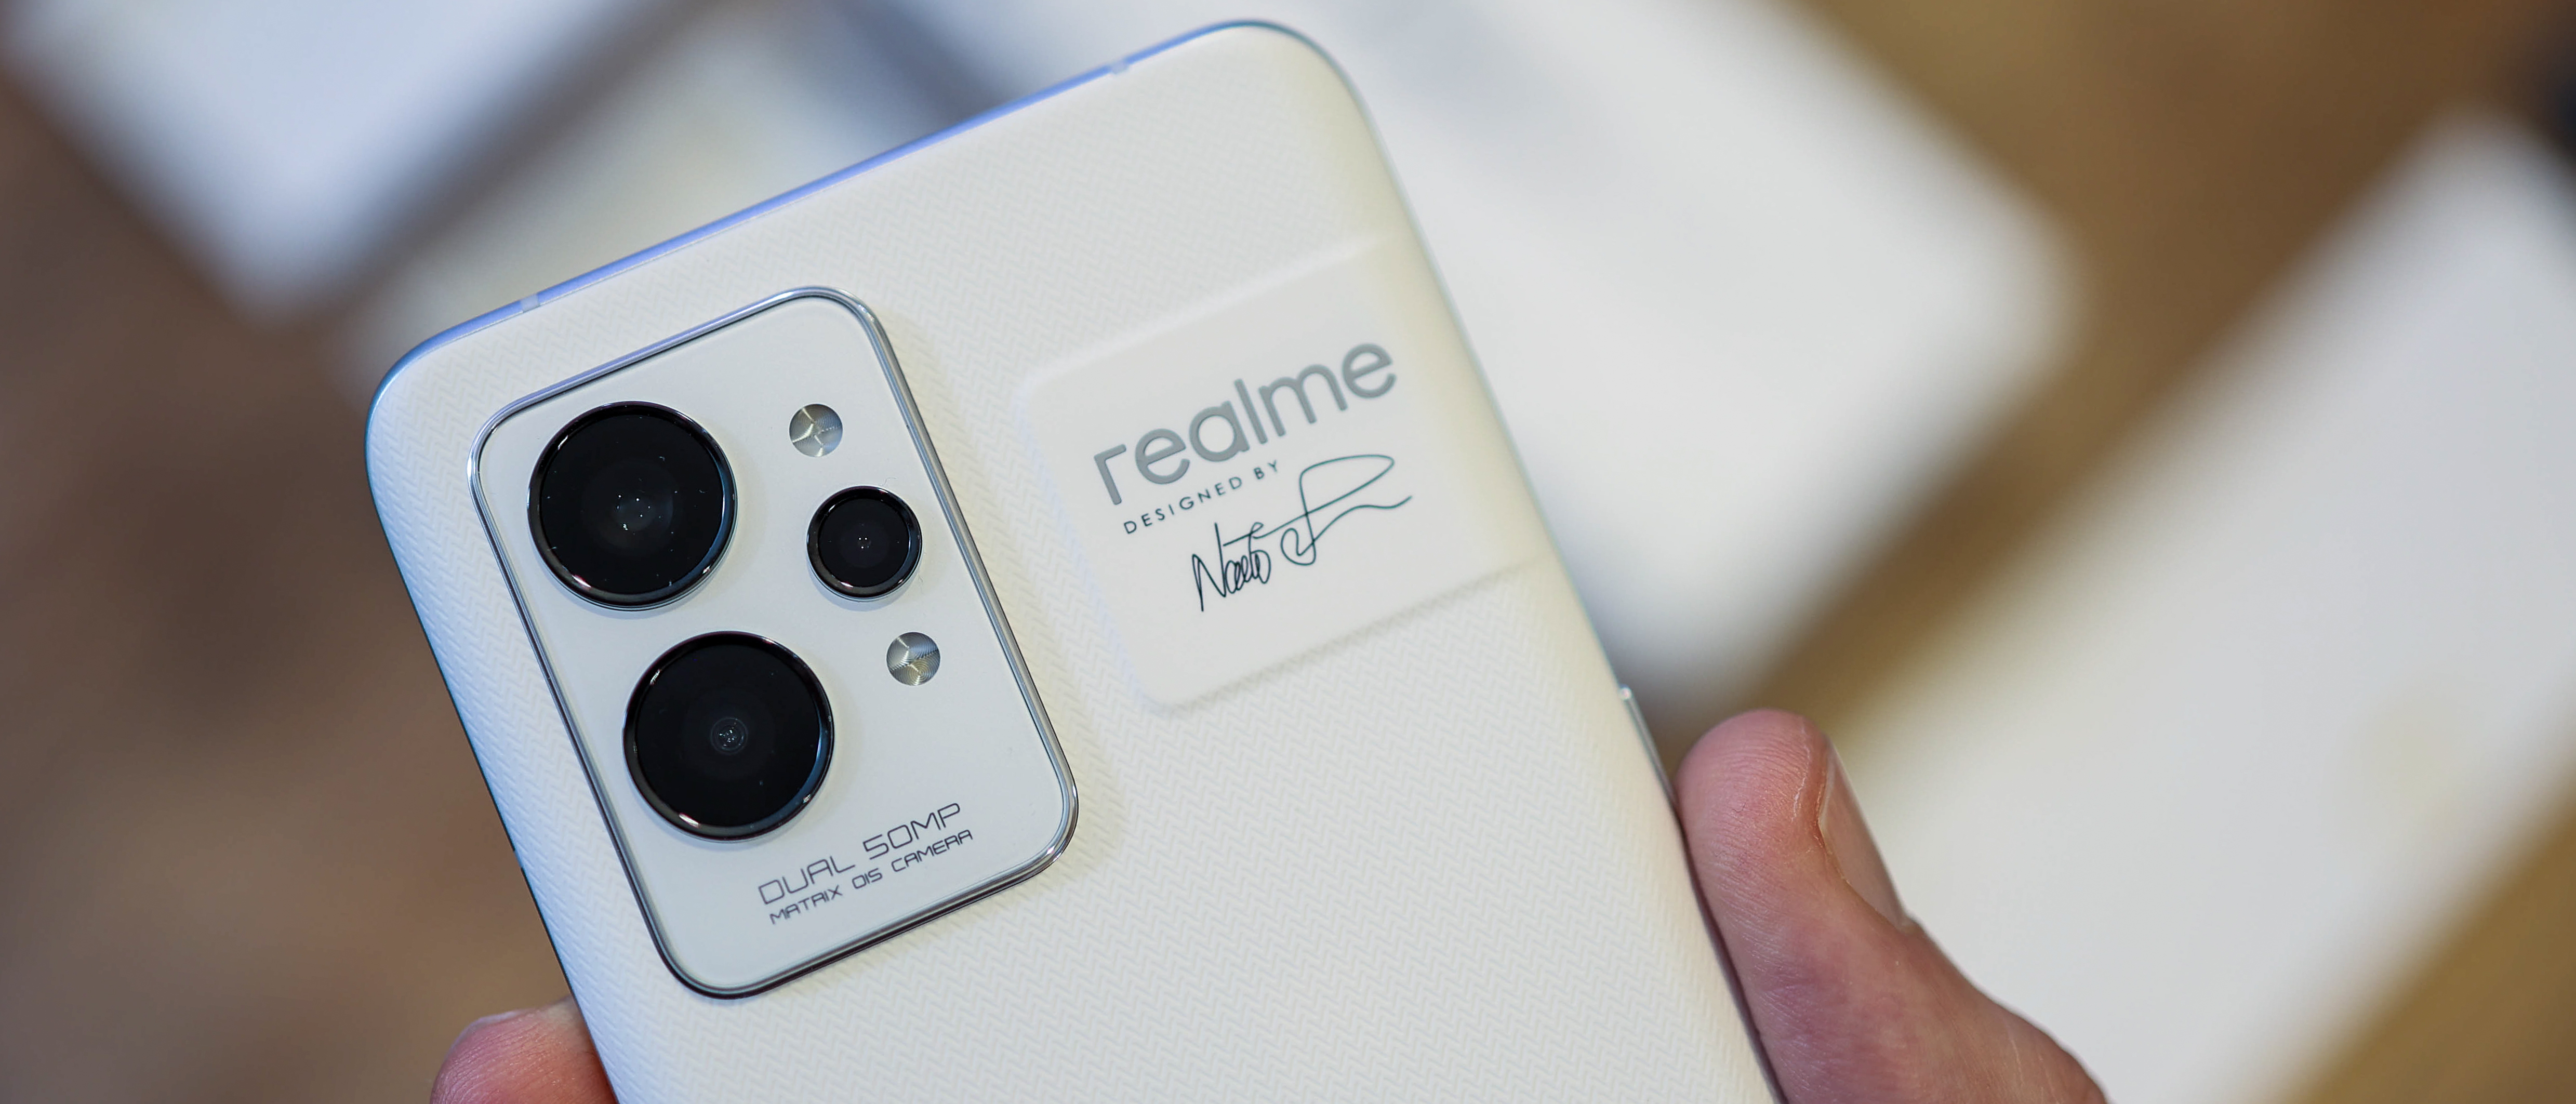 Realme GT2 Pro front image reveals ultra-slim bezels, impressive screen  space - Gizmochina